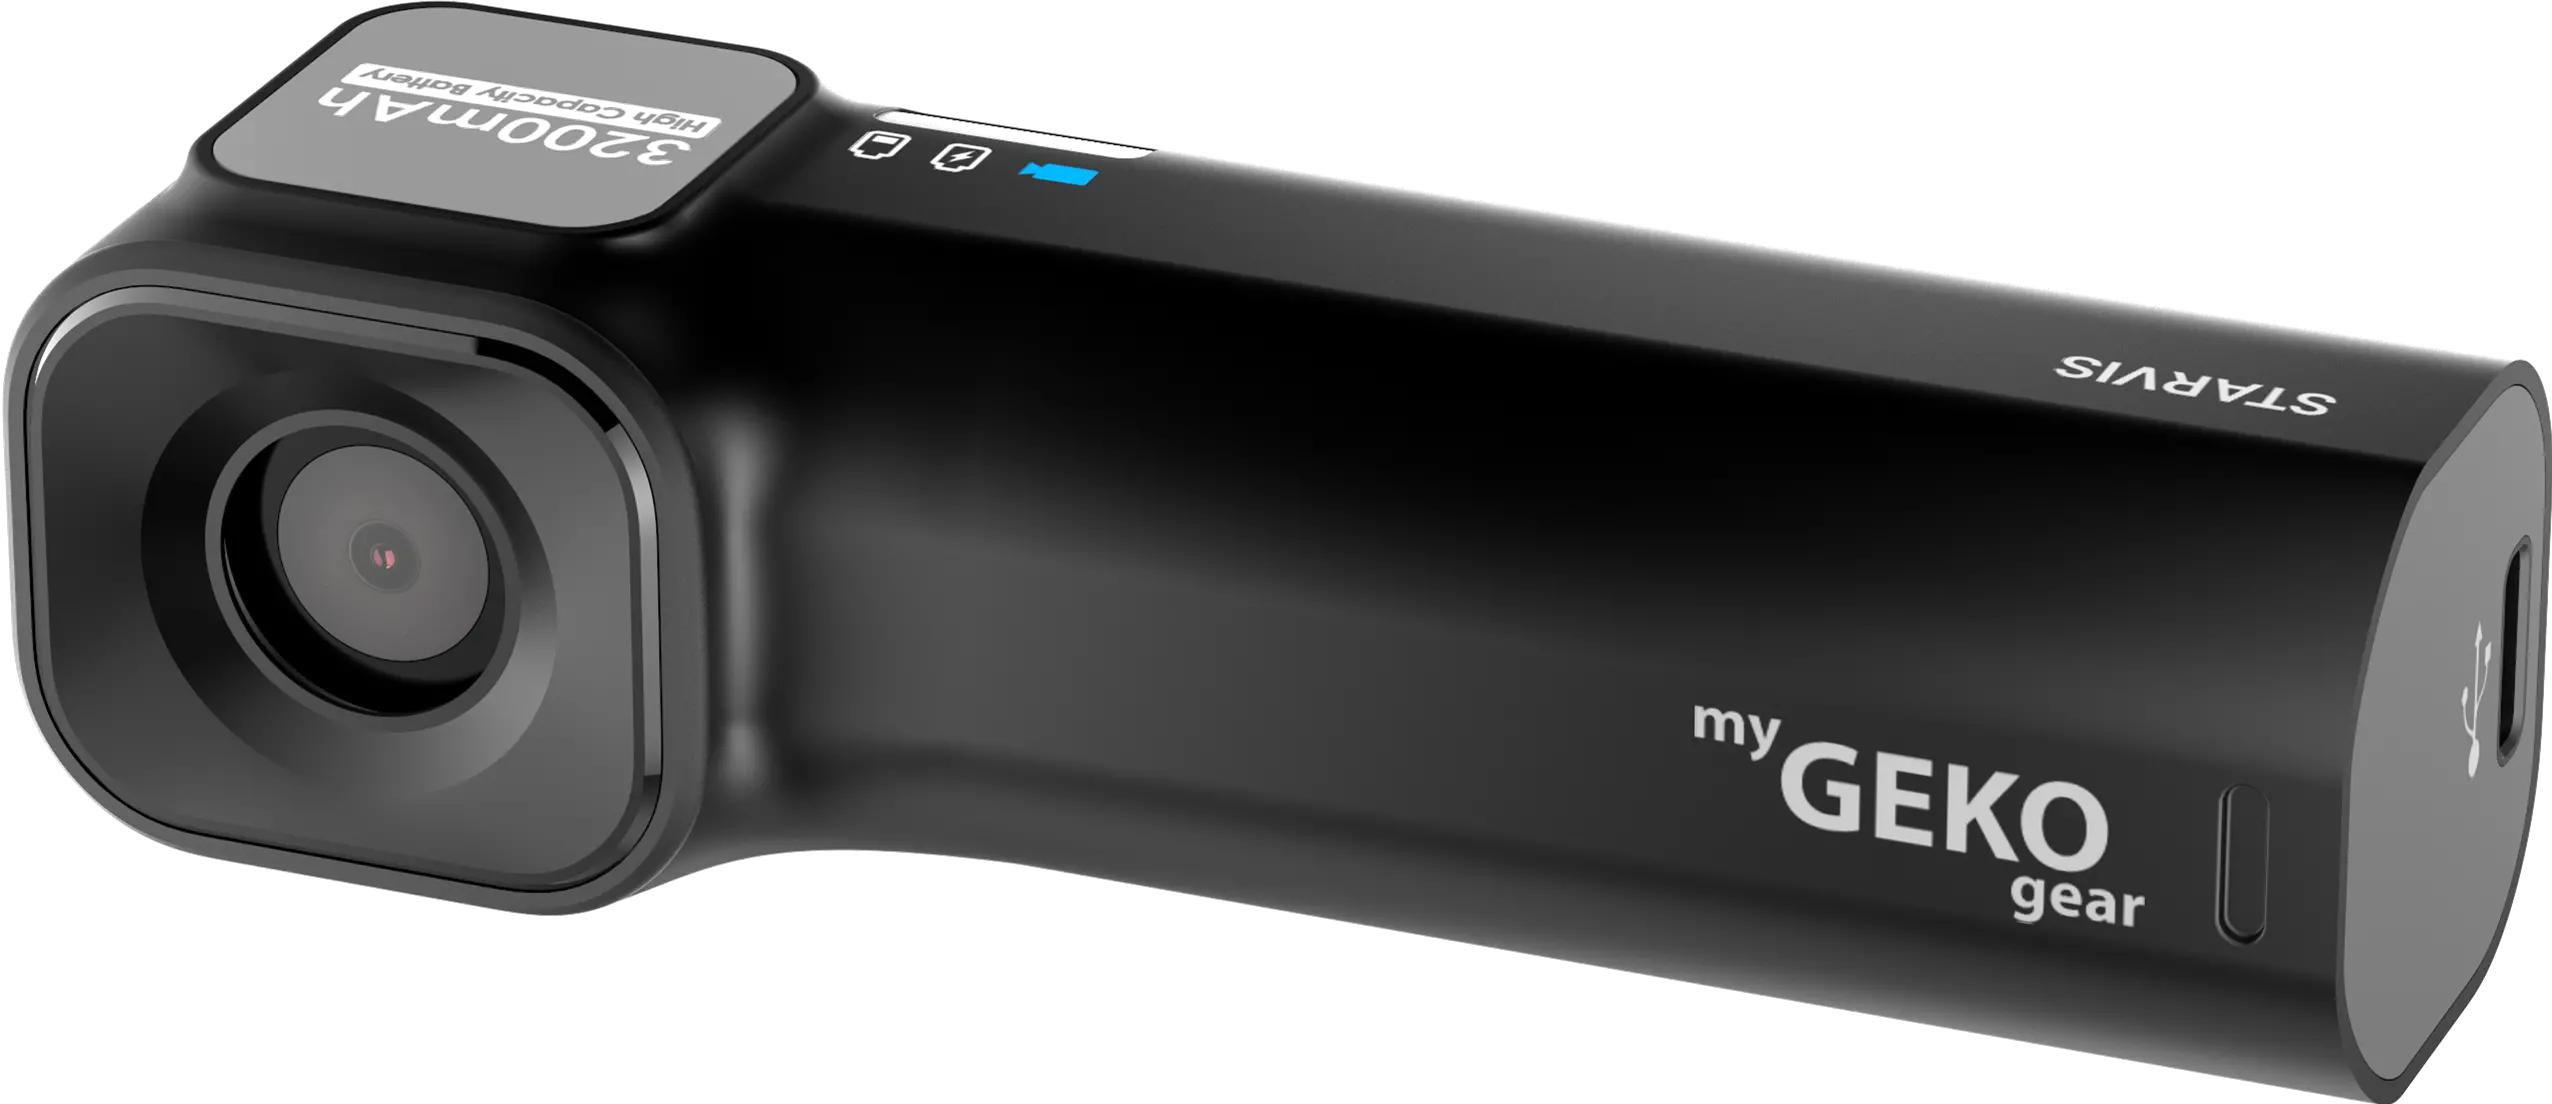 Mygekogear Moto Snap 1080P HD Motorcycle Dash Cam